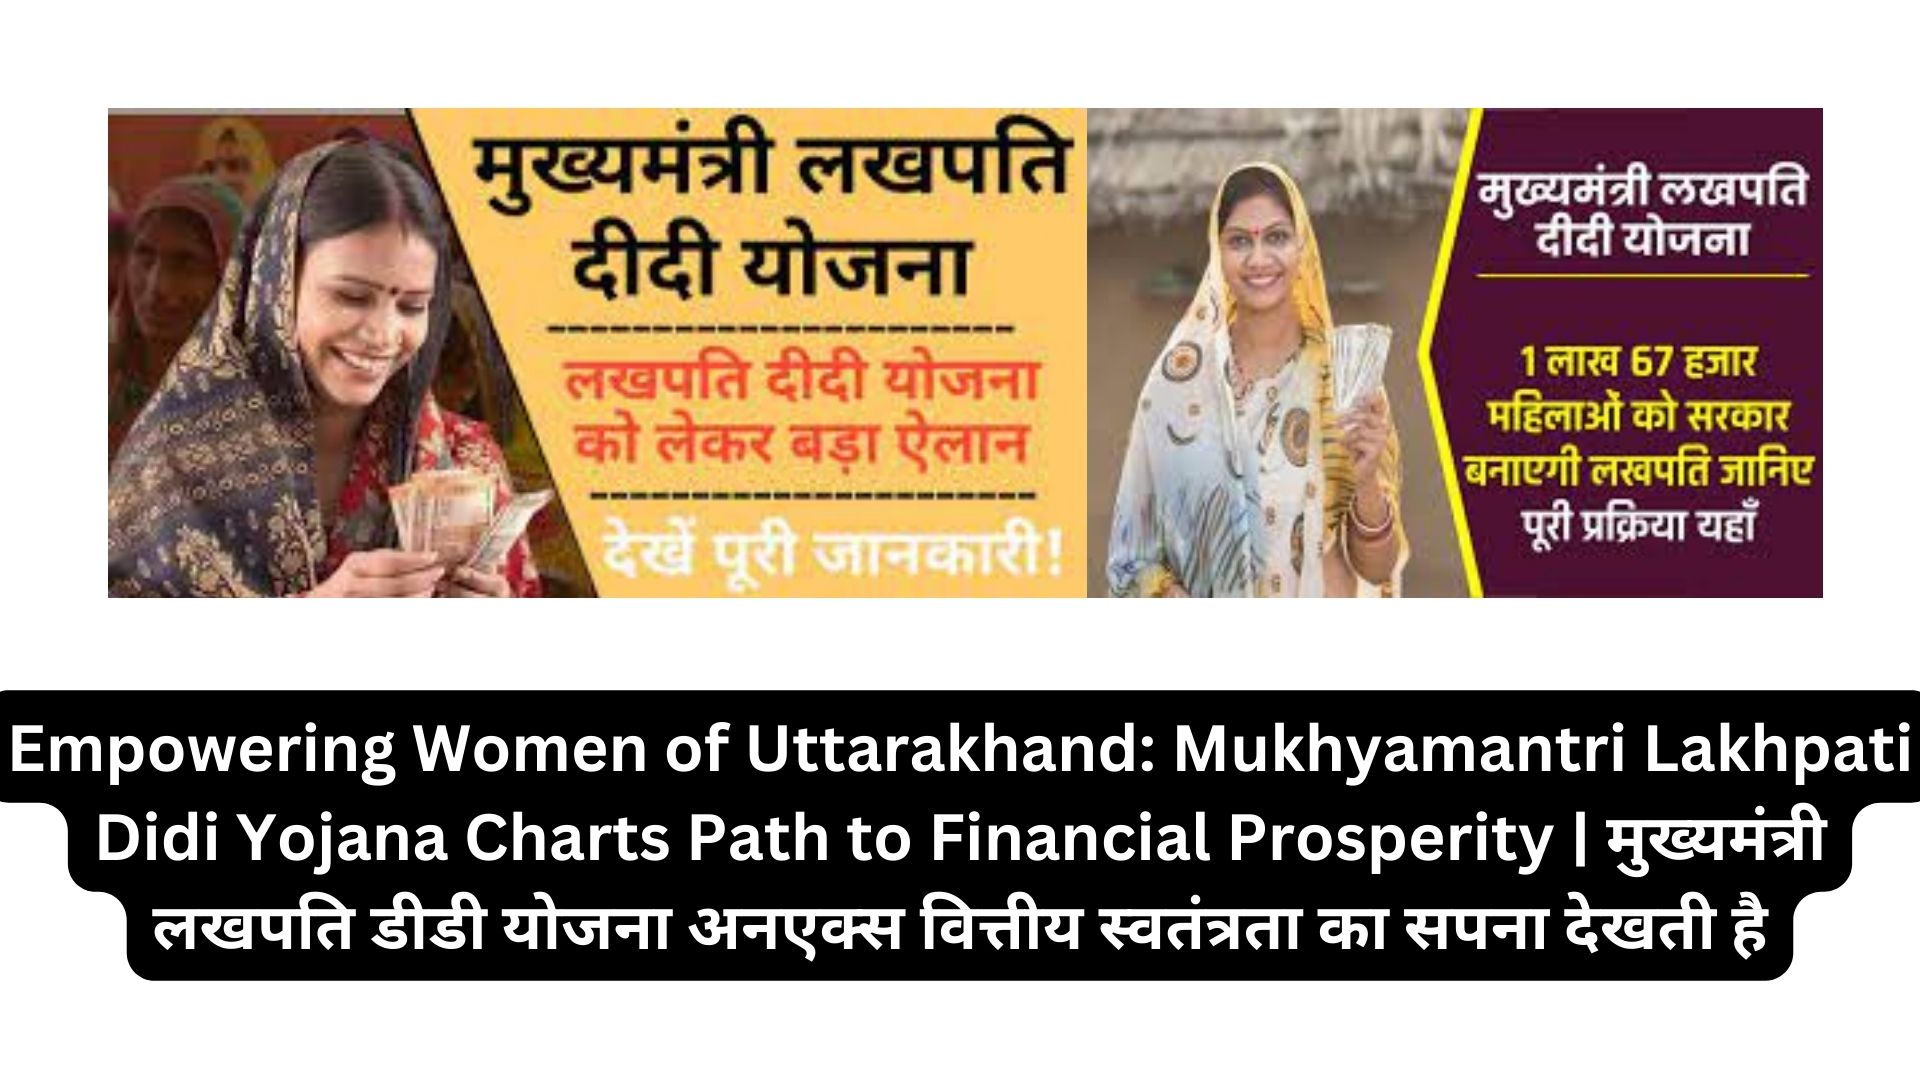 Empowering Women of Uttarakhand: Mukhyamantri Lakhpati Didi Yojana Charts Path to Financial Prosperity | मुख्यमंत्री लखपति डीडी योजना अनएक्स वित्तीय स्वतंत्रता का सपना देखती है